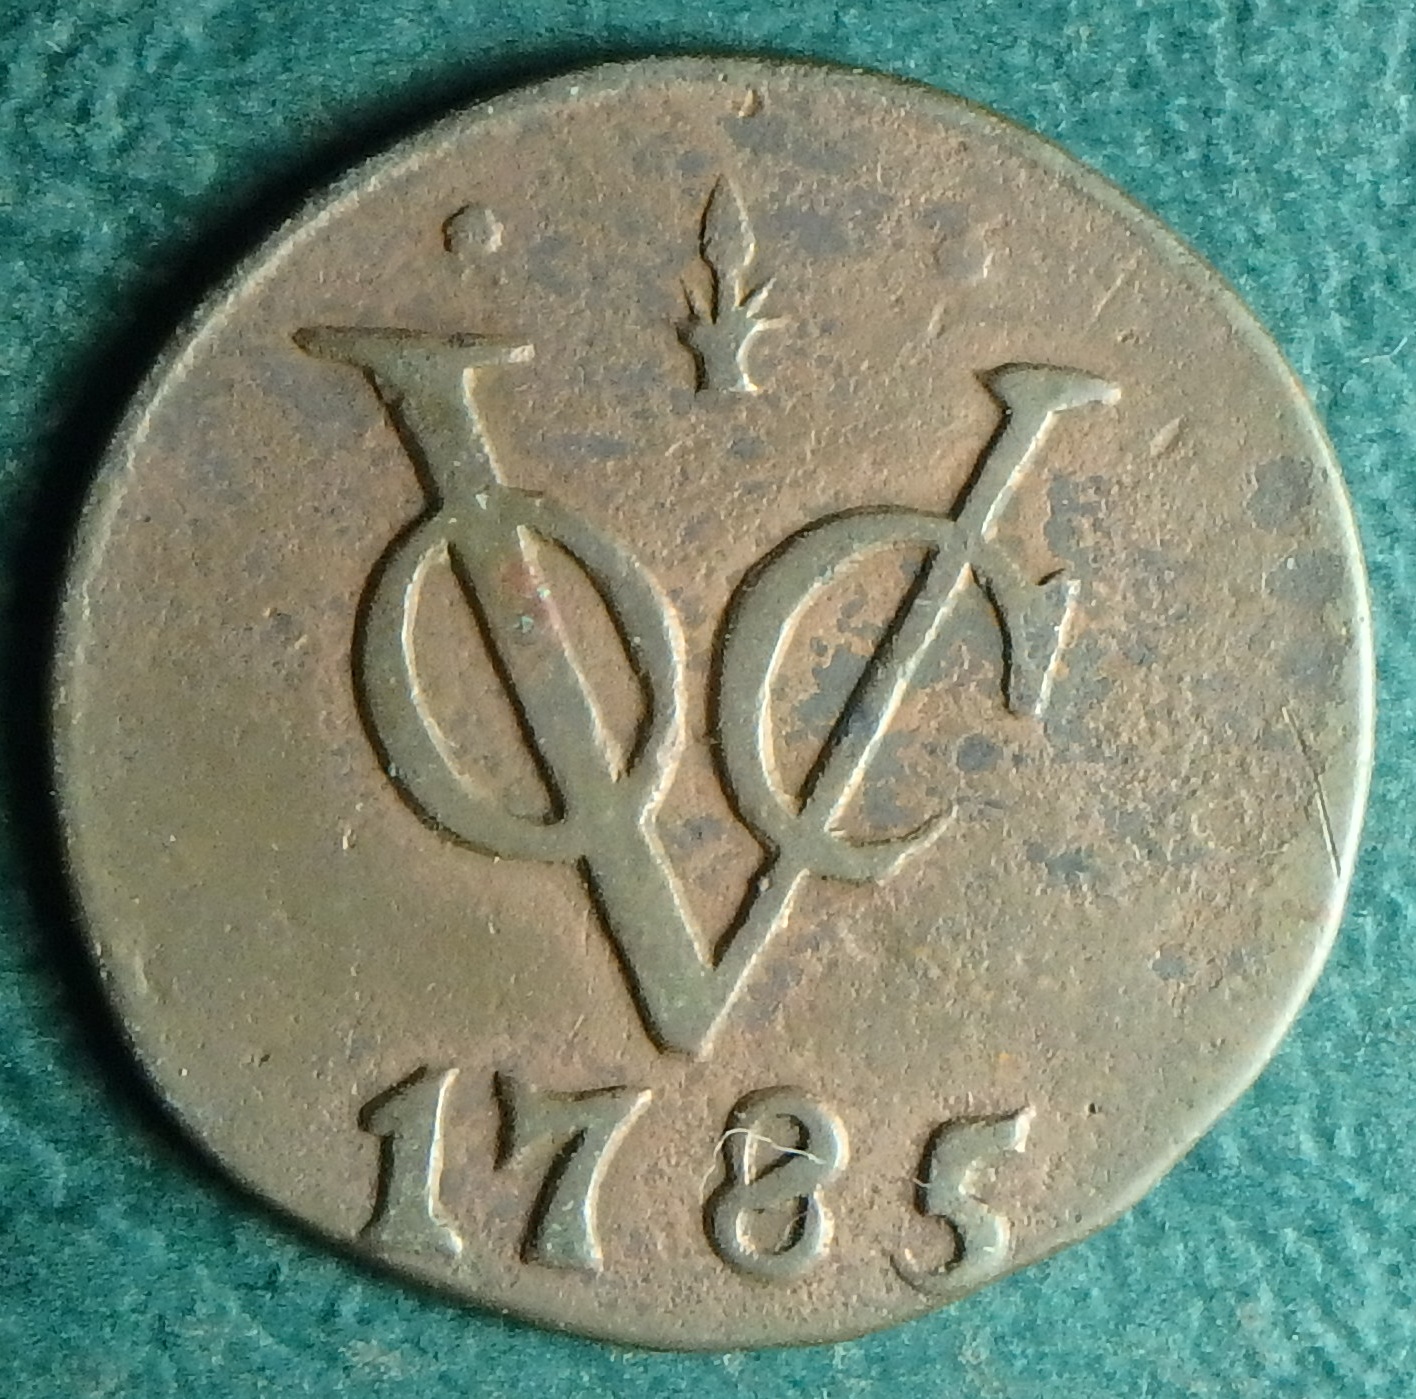 1785 G VOC 1 d rev.JPG